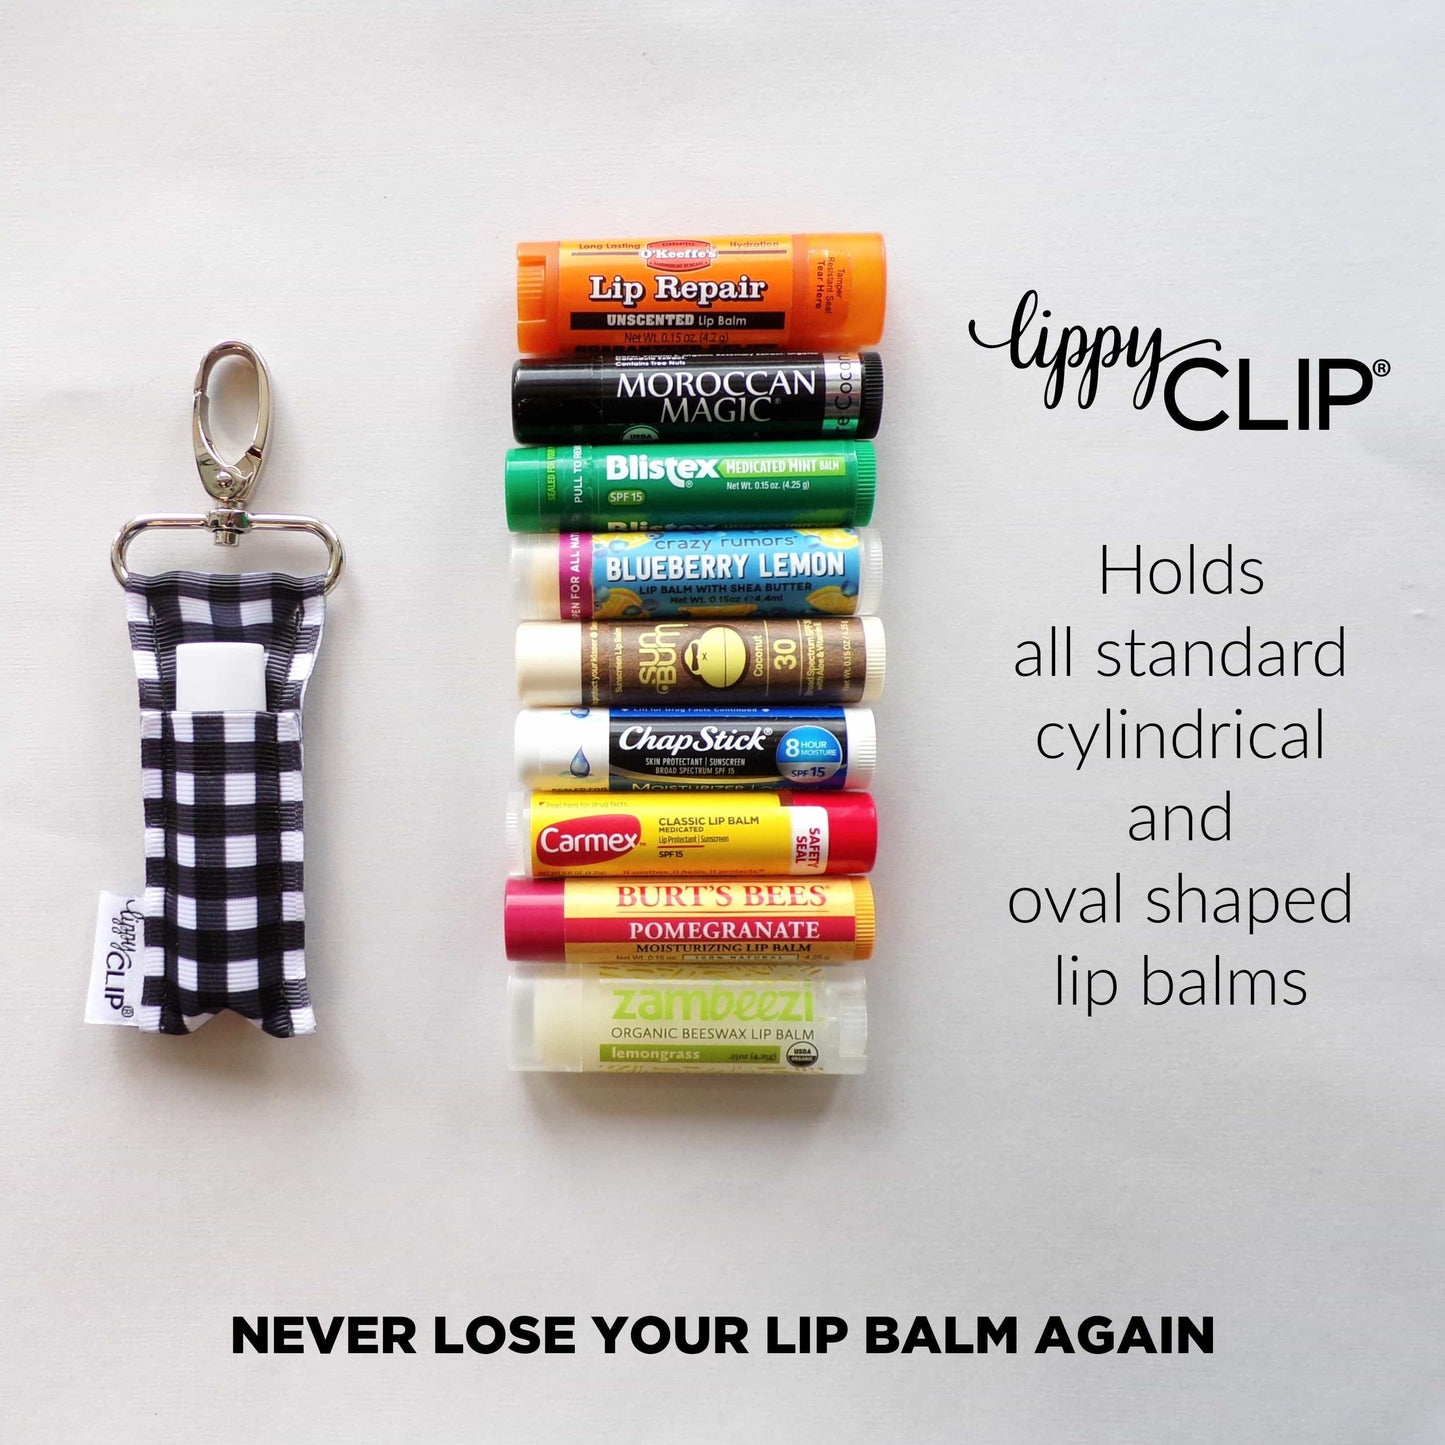 Ladybug LippyClip® Lip Balm Holder for Chapstick